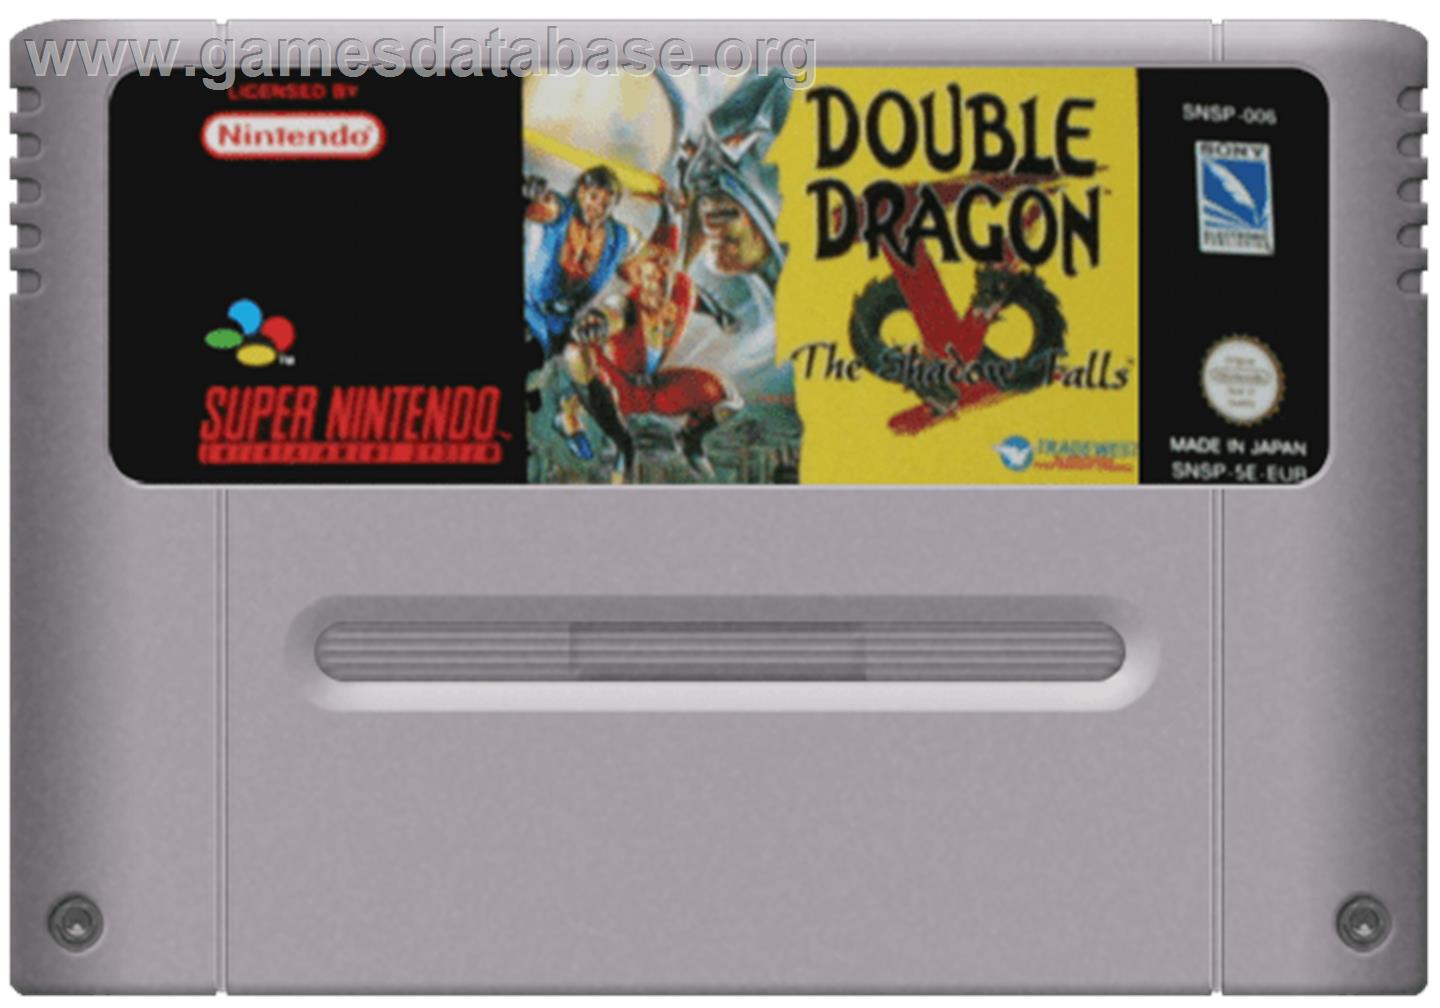 Double Dragon V: The Shadow Falls - Nintendo SNES - Artwork - Cartridge